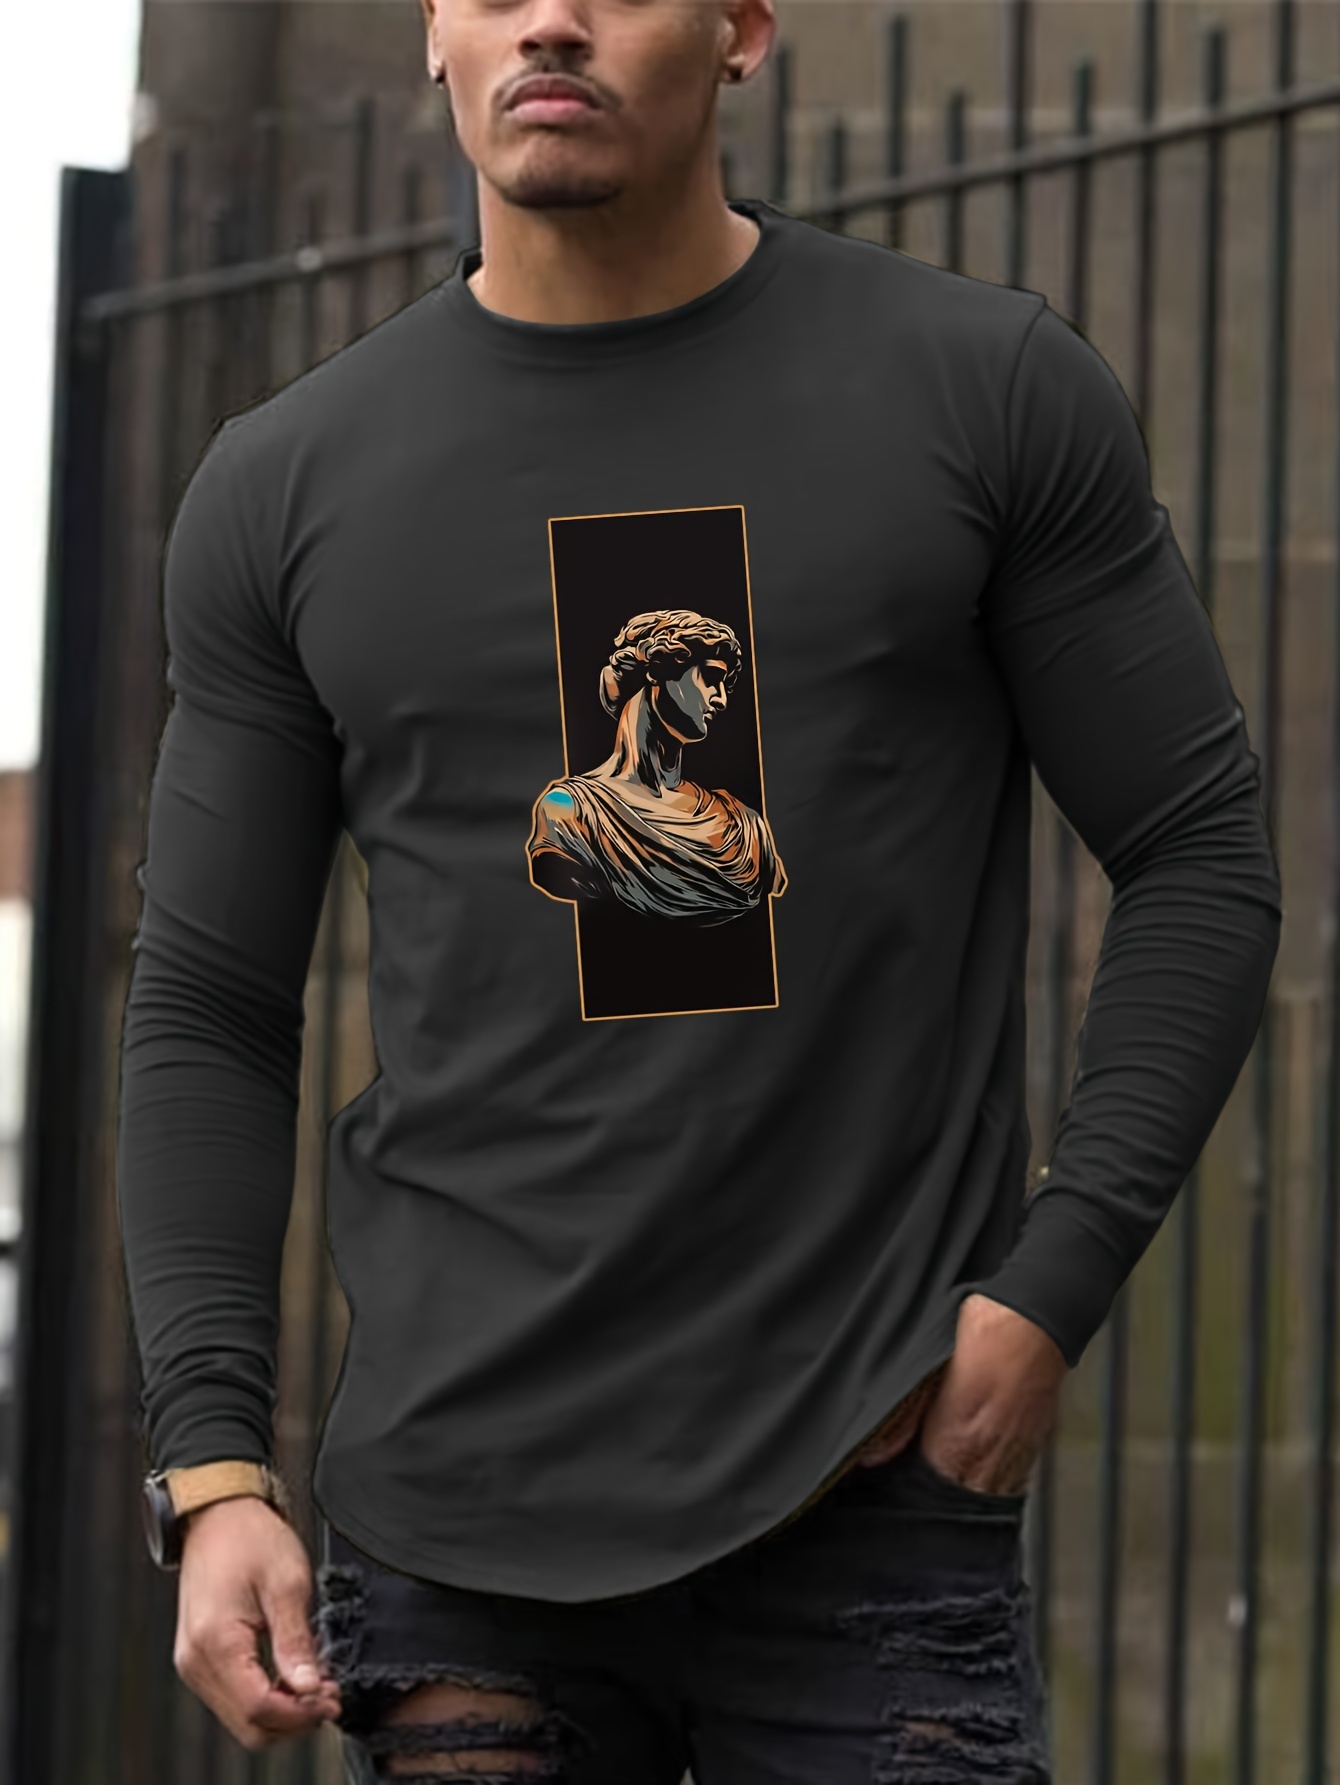 Apollo Long Sleeve T-Shirt